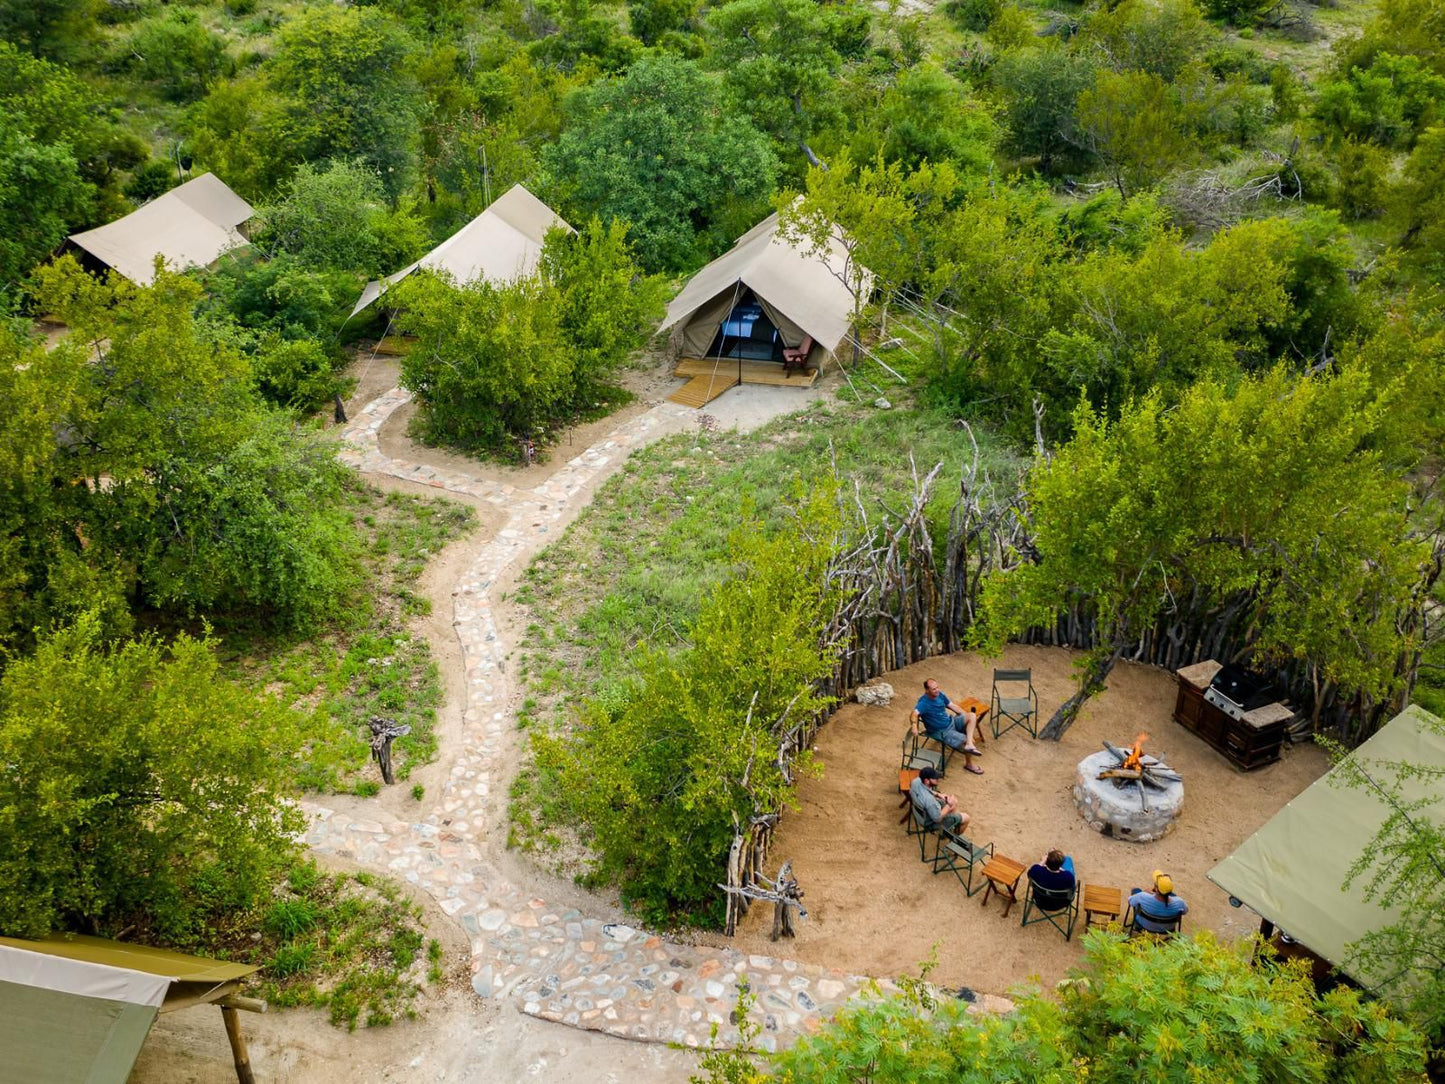 Bundox Explorer Camp Olifants Mpumalanga South Africa Boat, Vehicle, Tent, Architecture